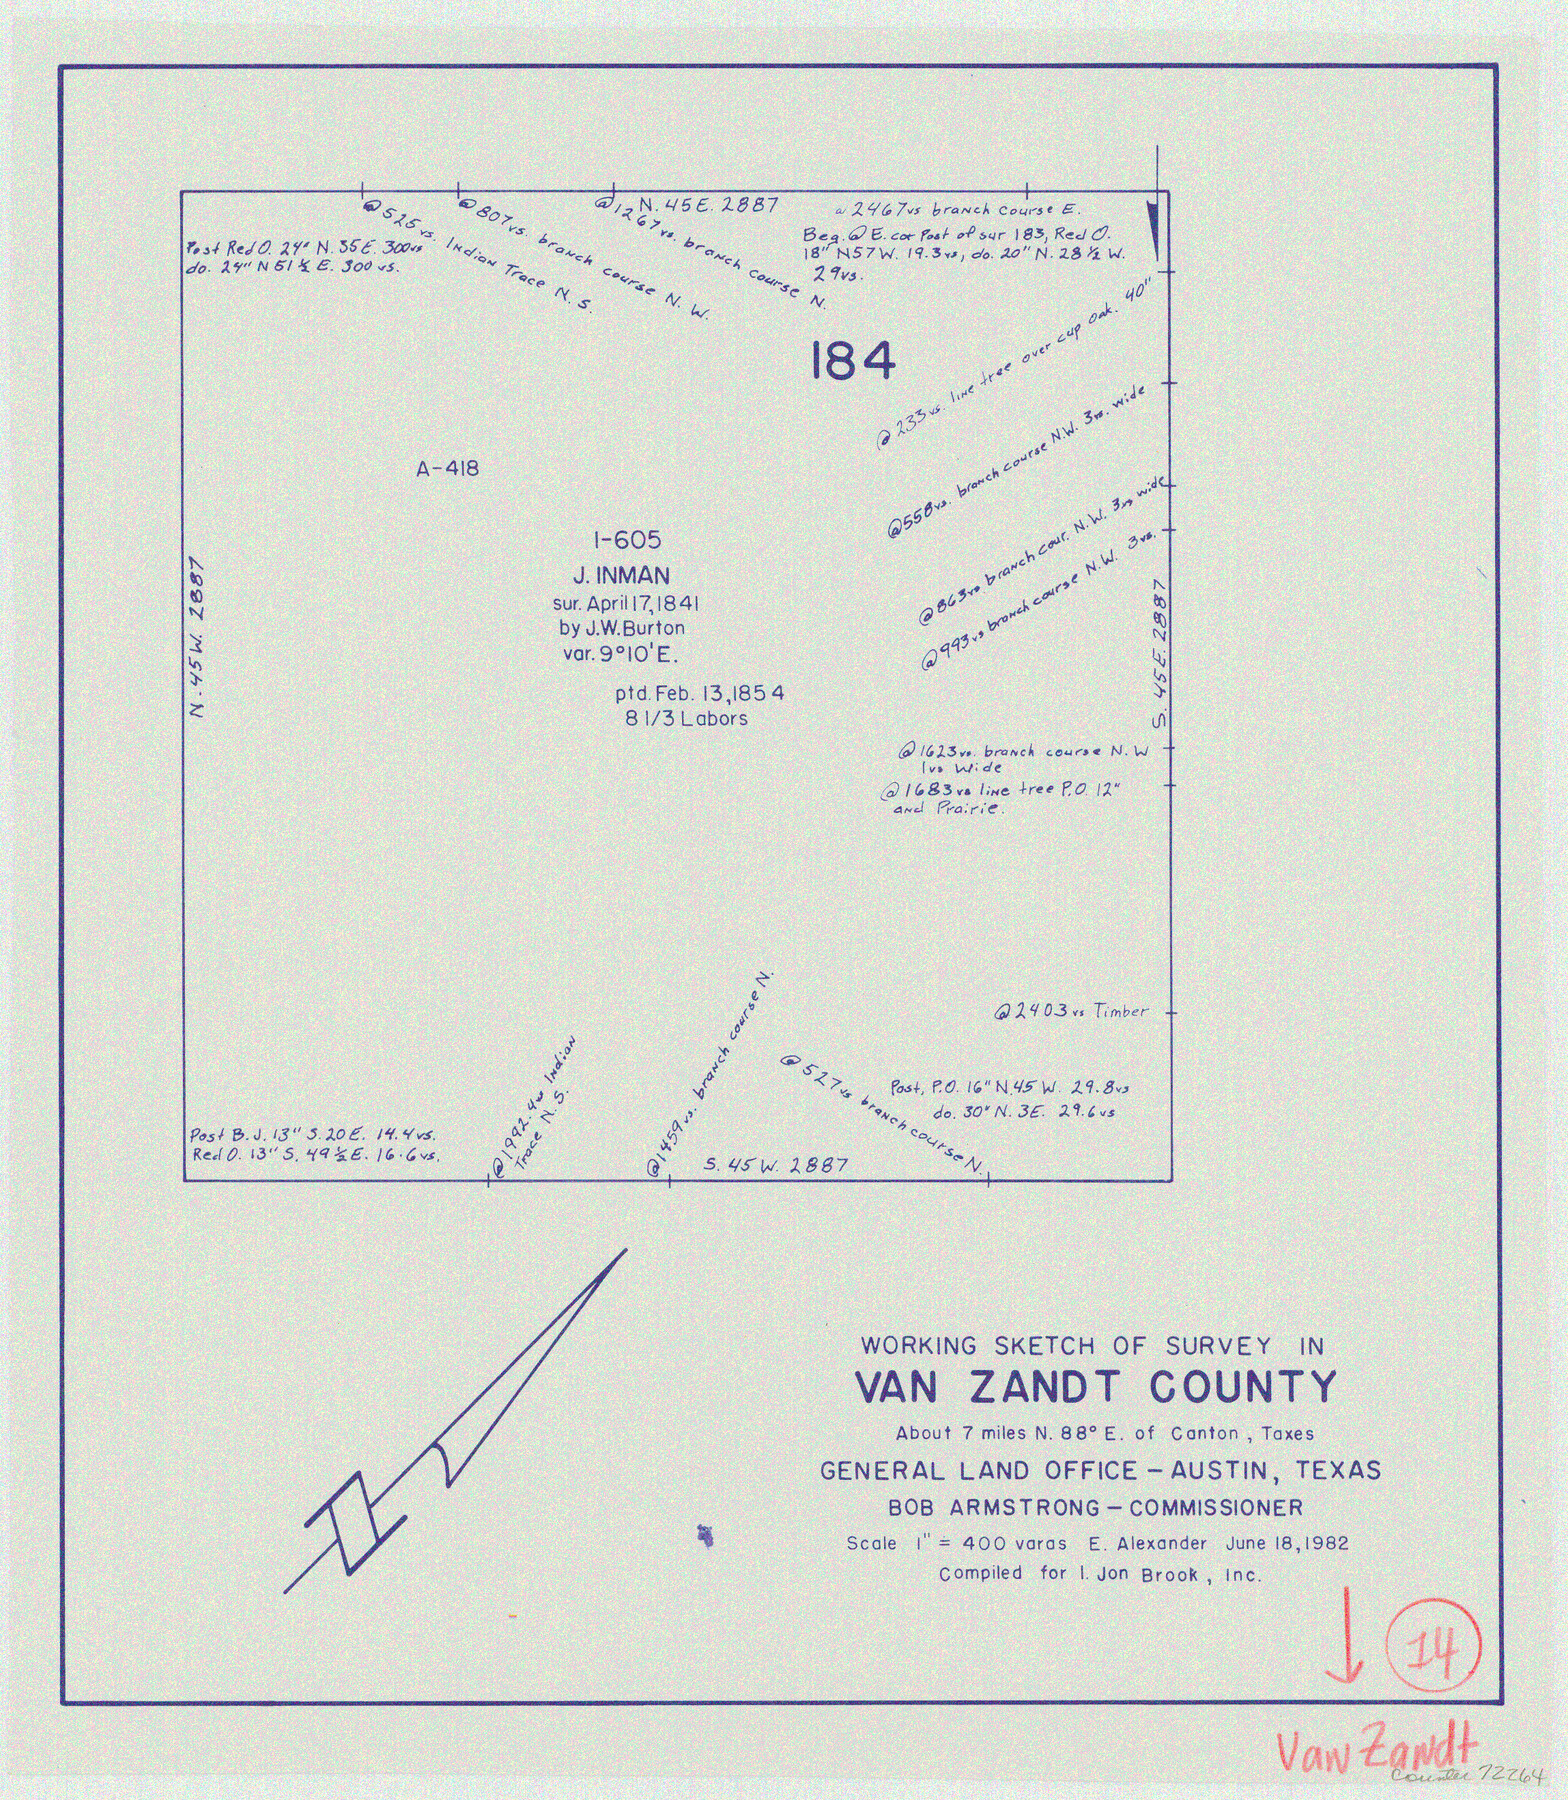 72264, Van Zandt County Working Sketch 14, General Map Collection